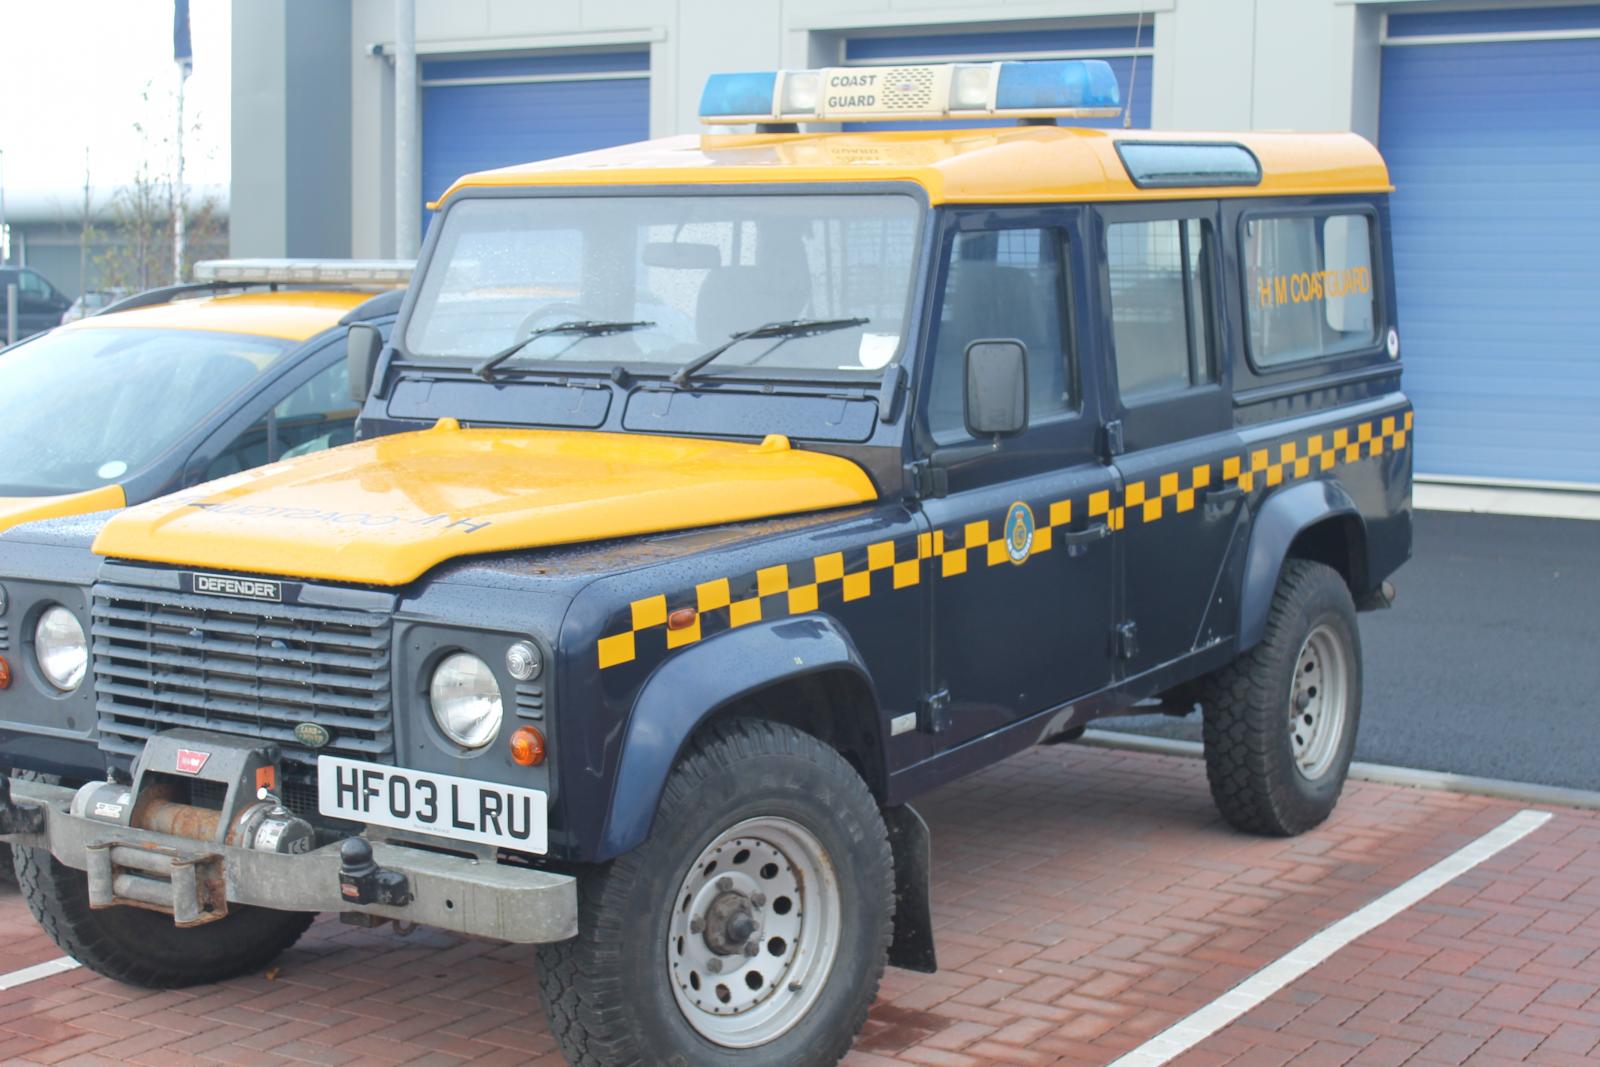 HMCG Land Rover At Training Centre Vehicles THE No1 Coastguard And 